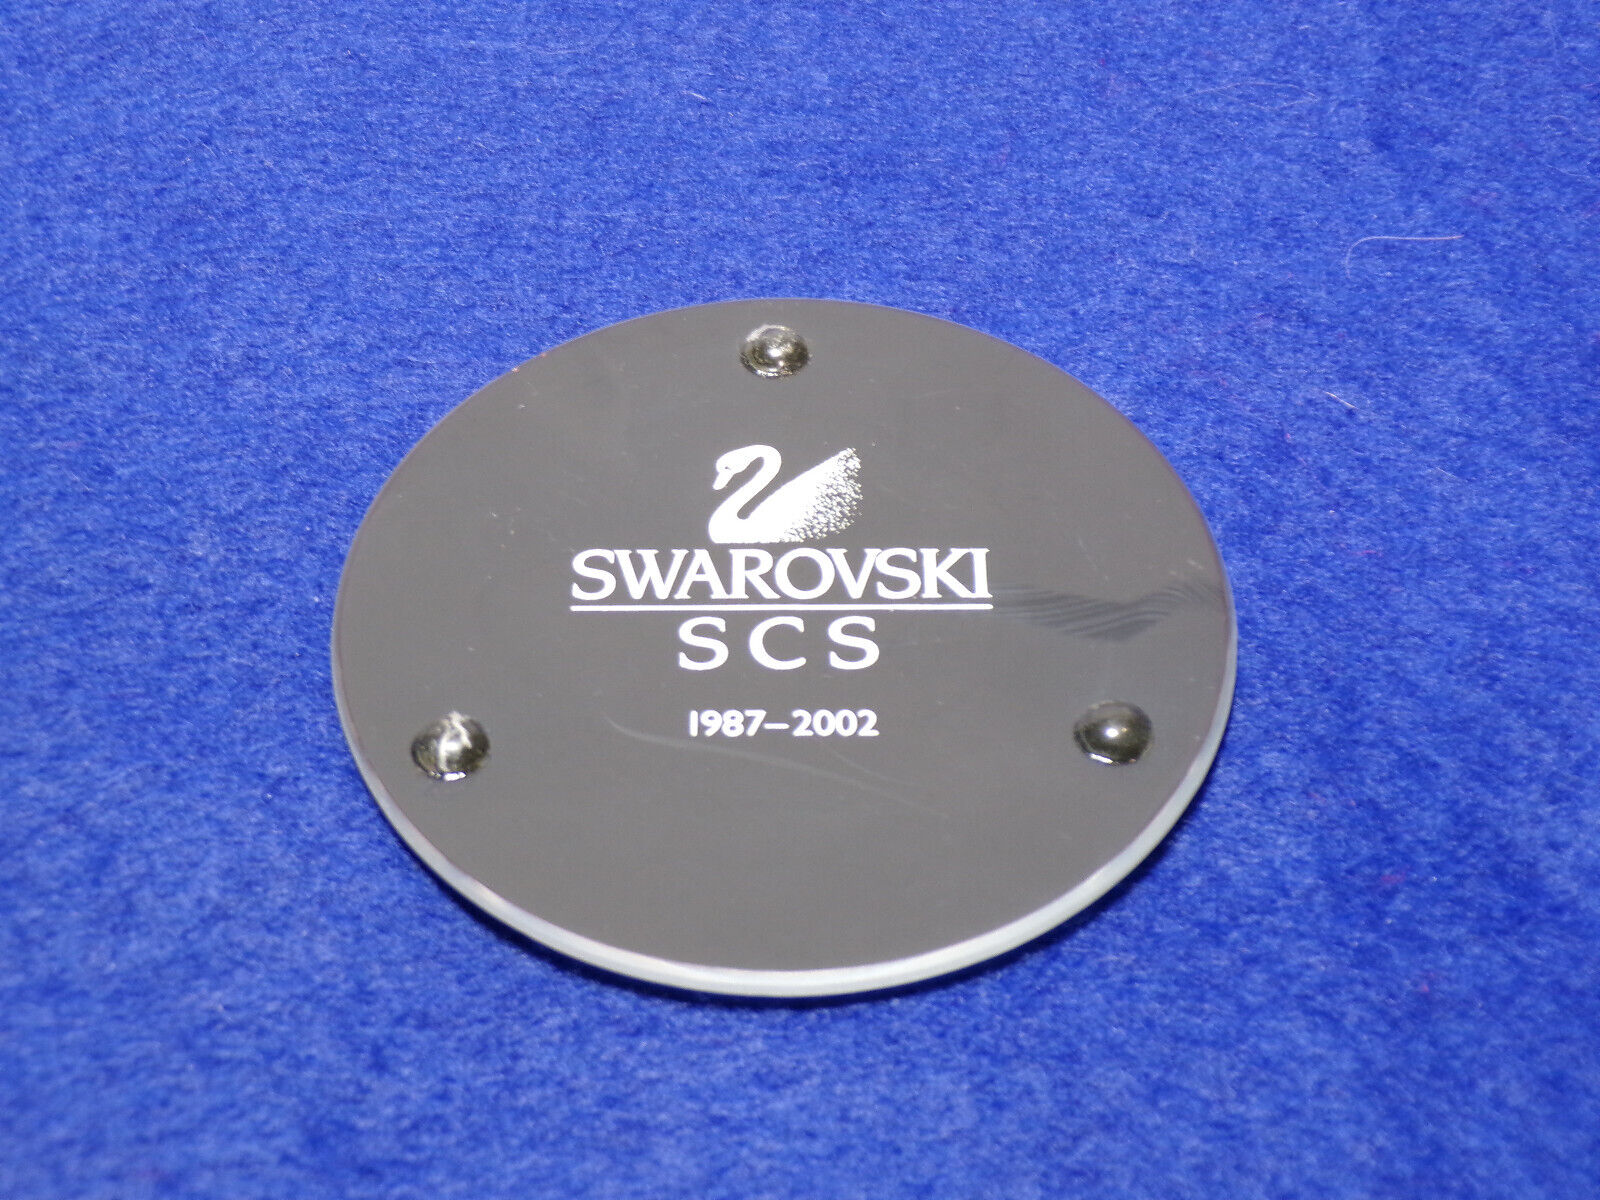 Swarovski SCS 1987-2002 Signed Mirror 3